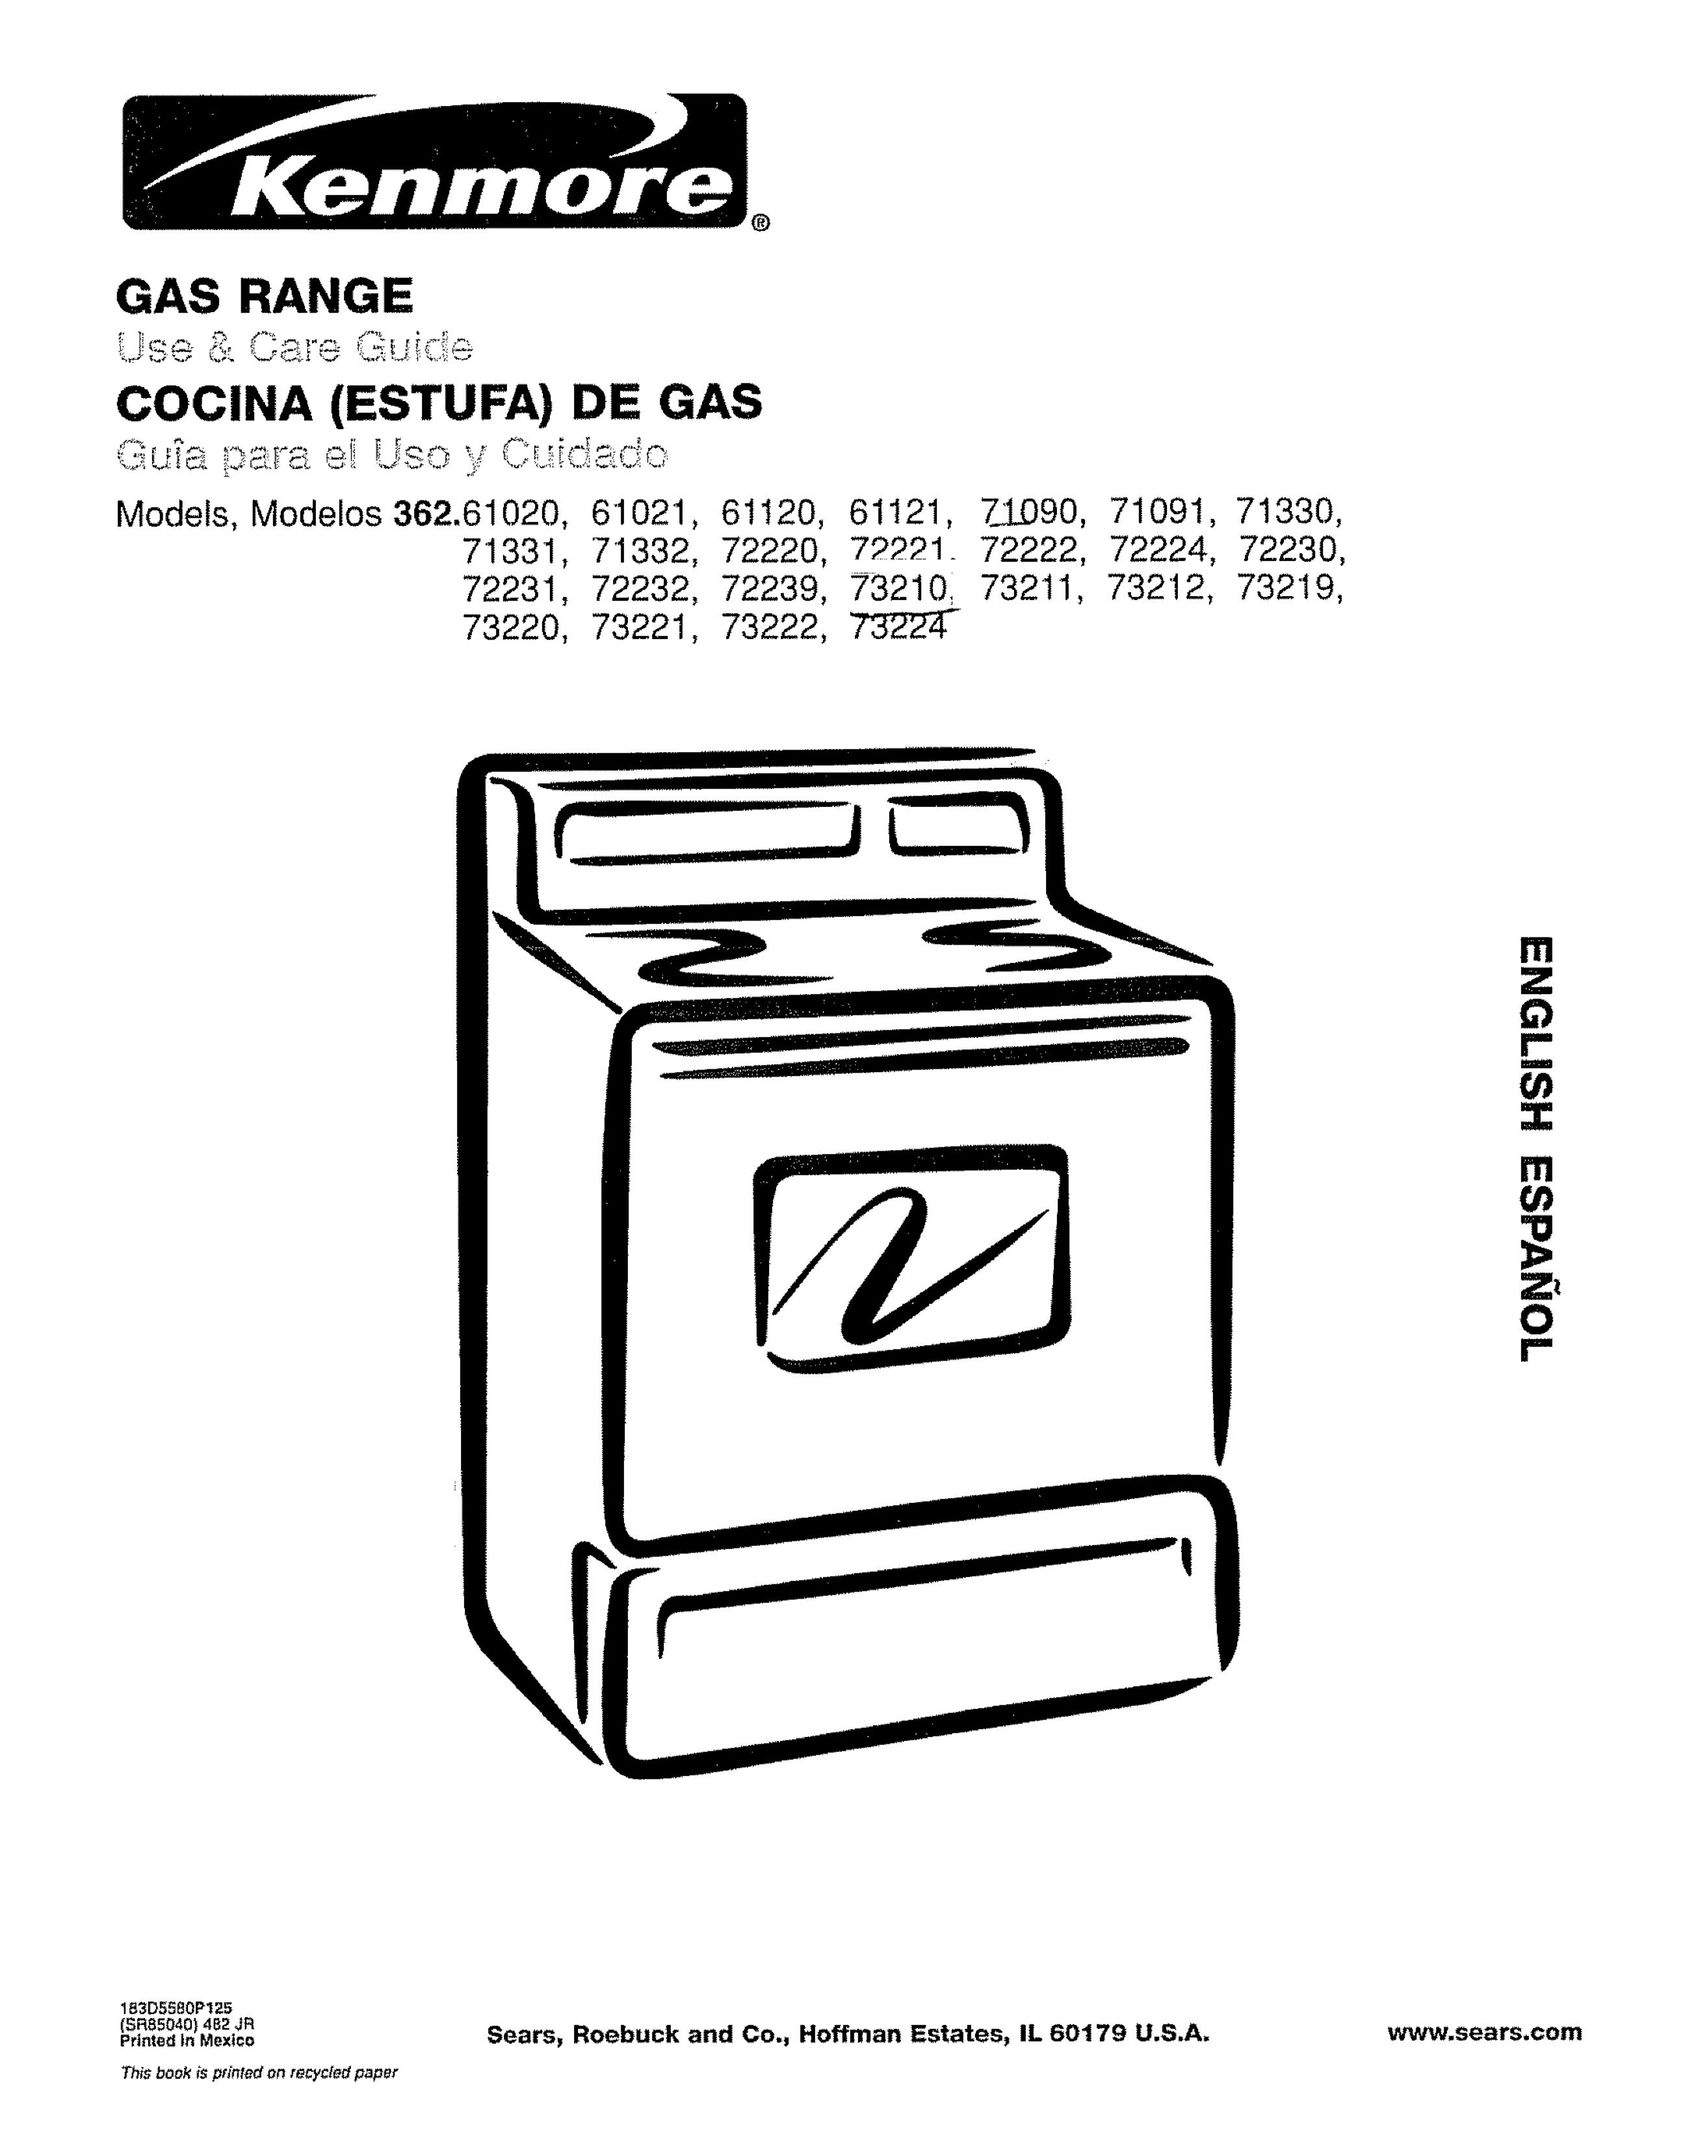 Kenmore 362.72224 Range User Manual